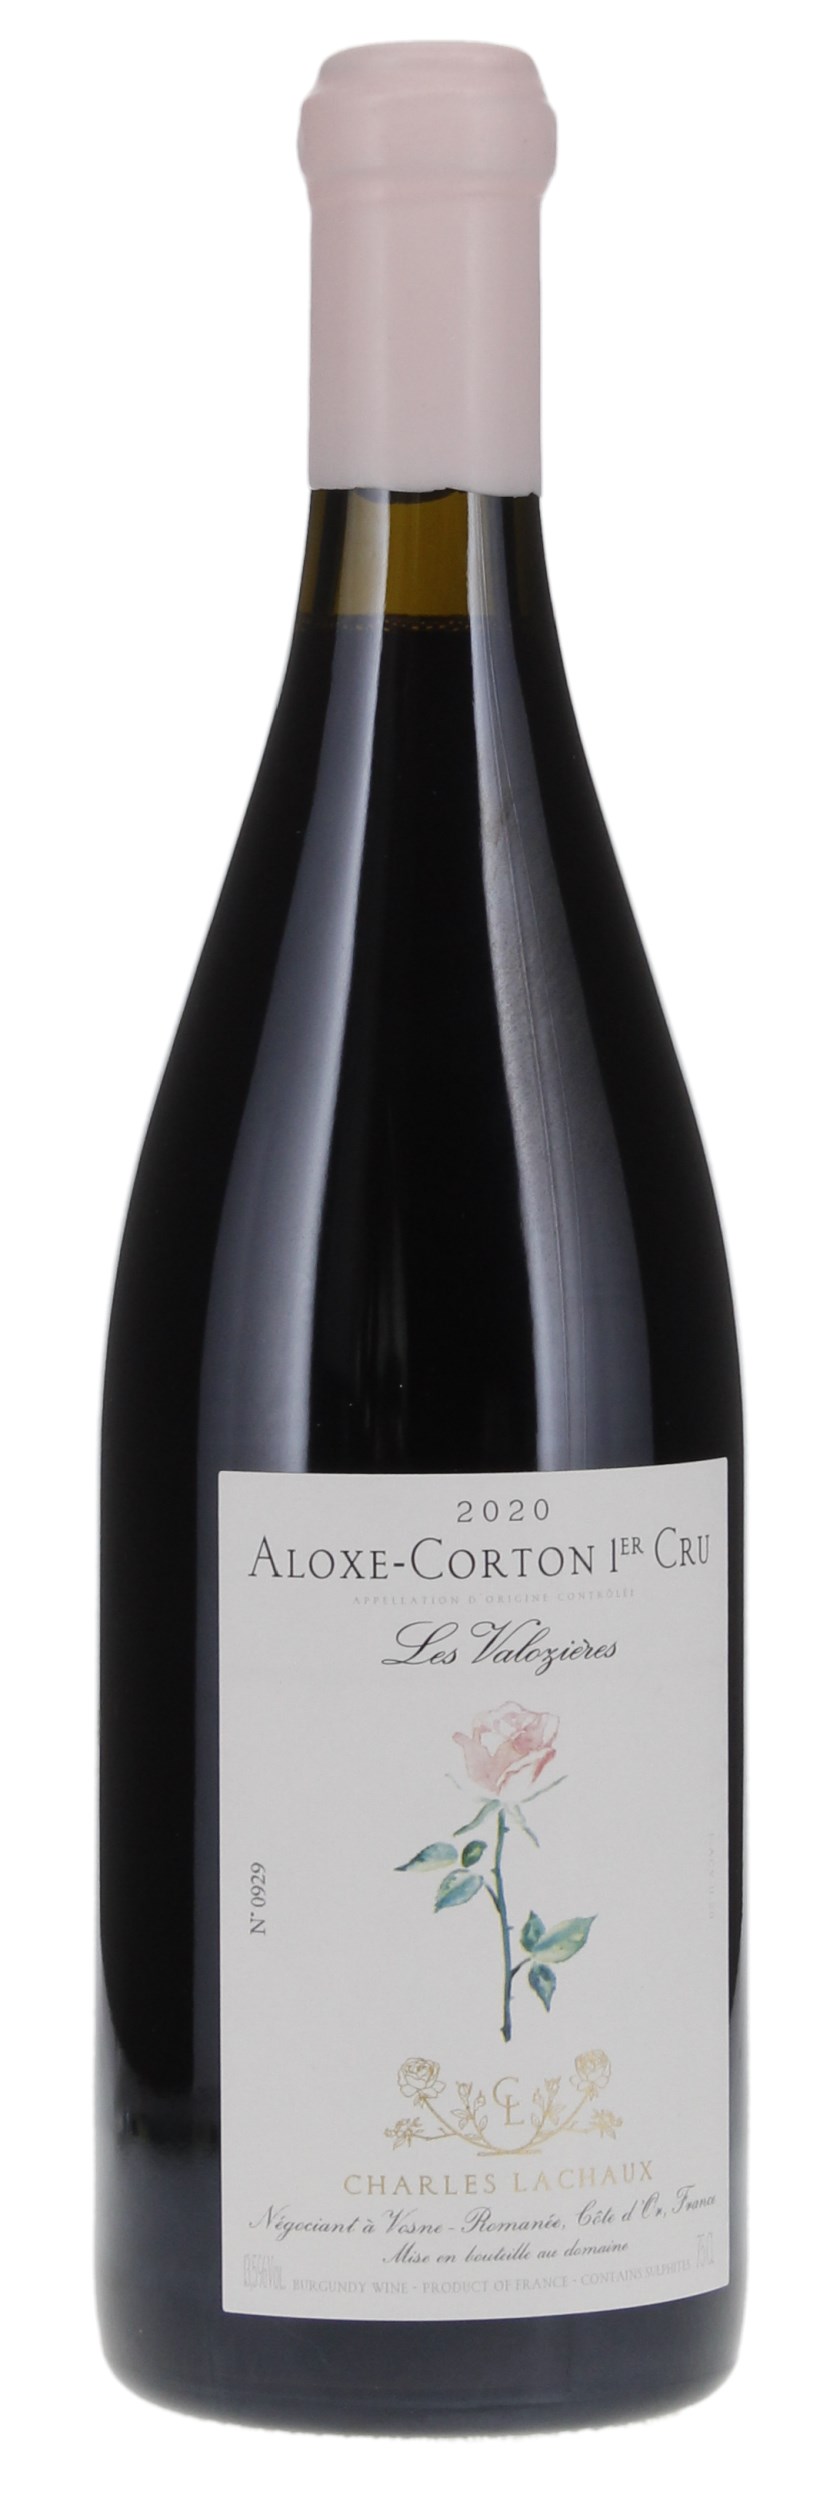 2020 Charles Lachaux Aloxe-Corton Les Valozières, 750ml